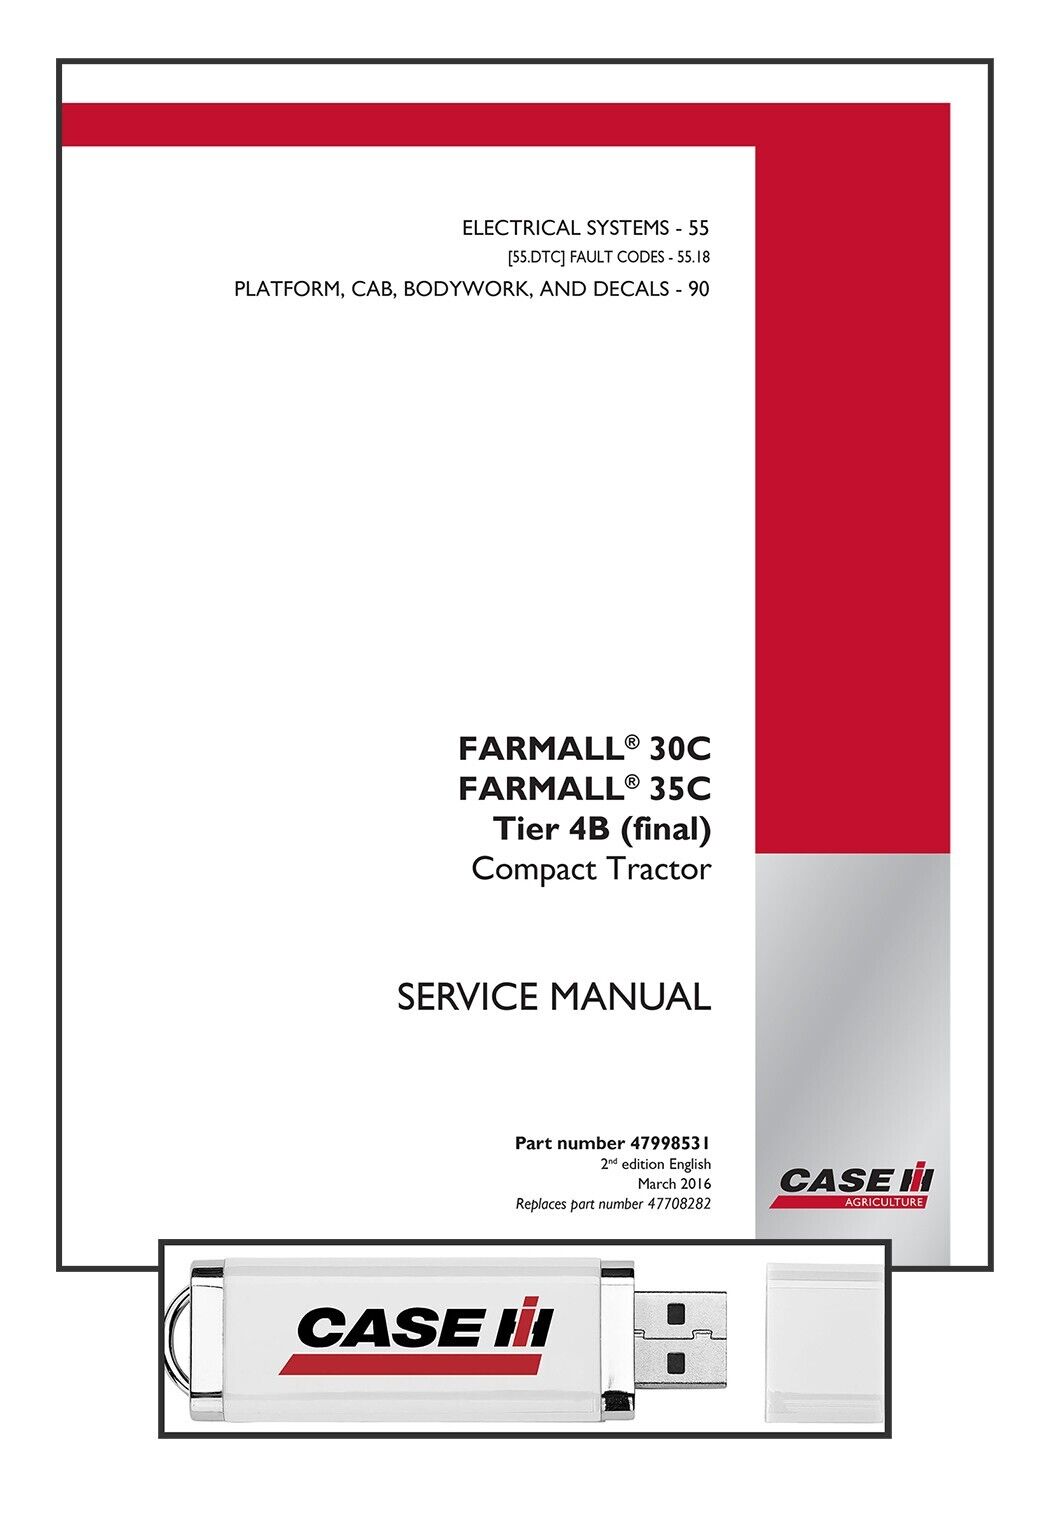 CASE IH Farmall 30C Farmall 35C Tier 4B Tractor Service Manual on USB stick